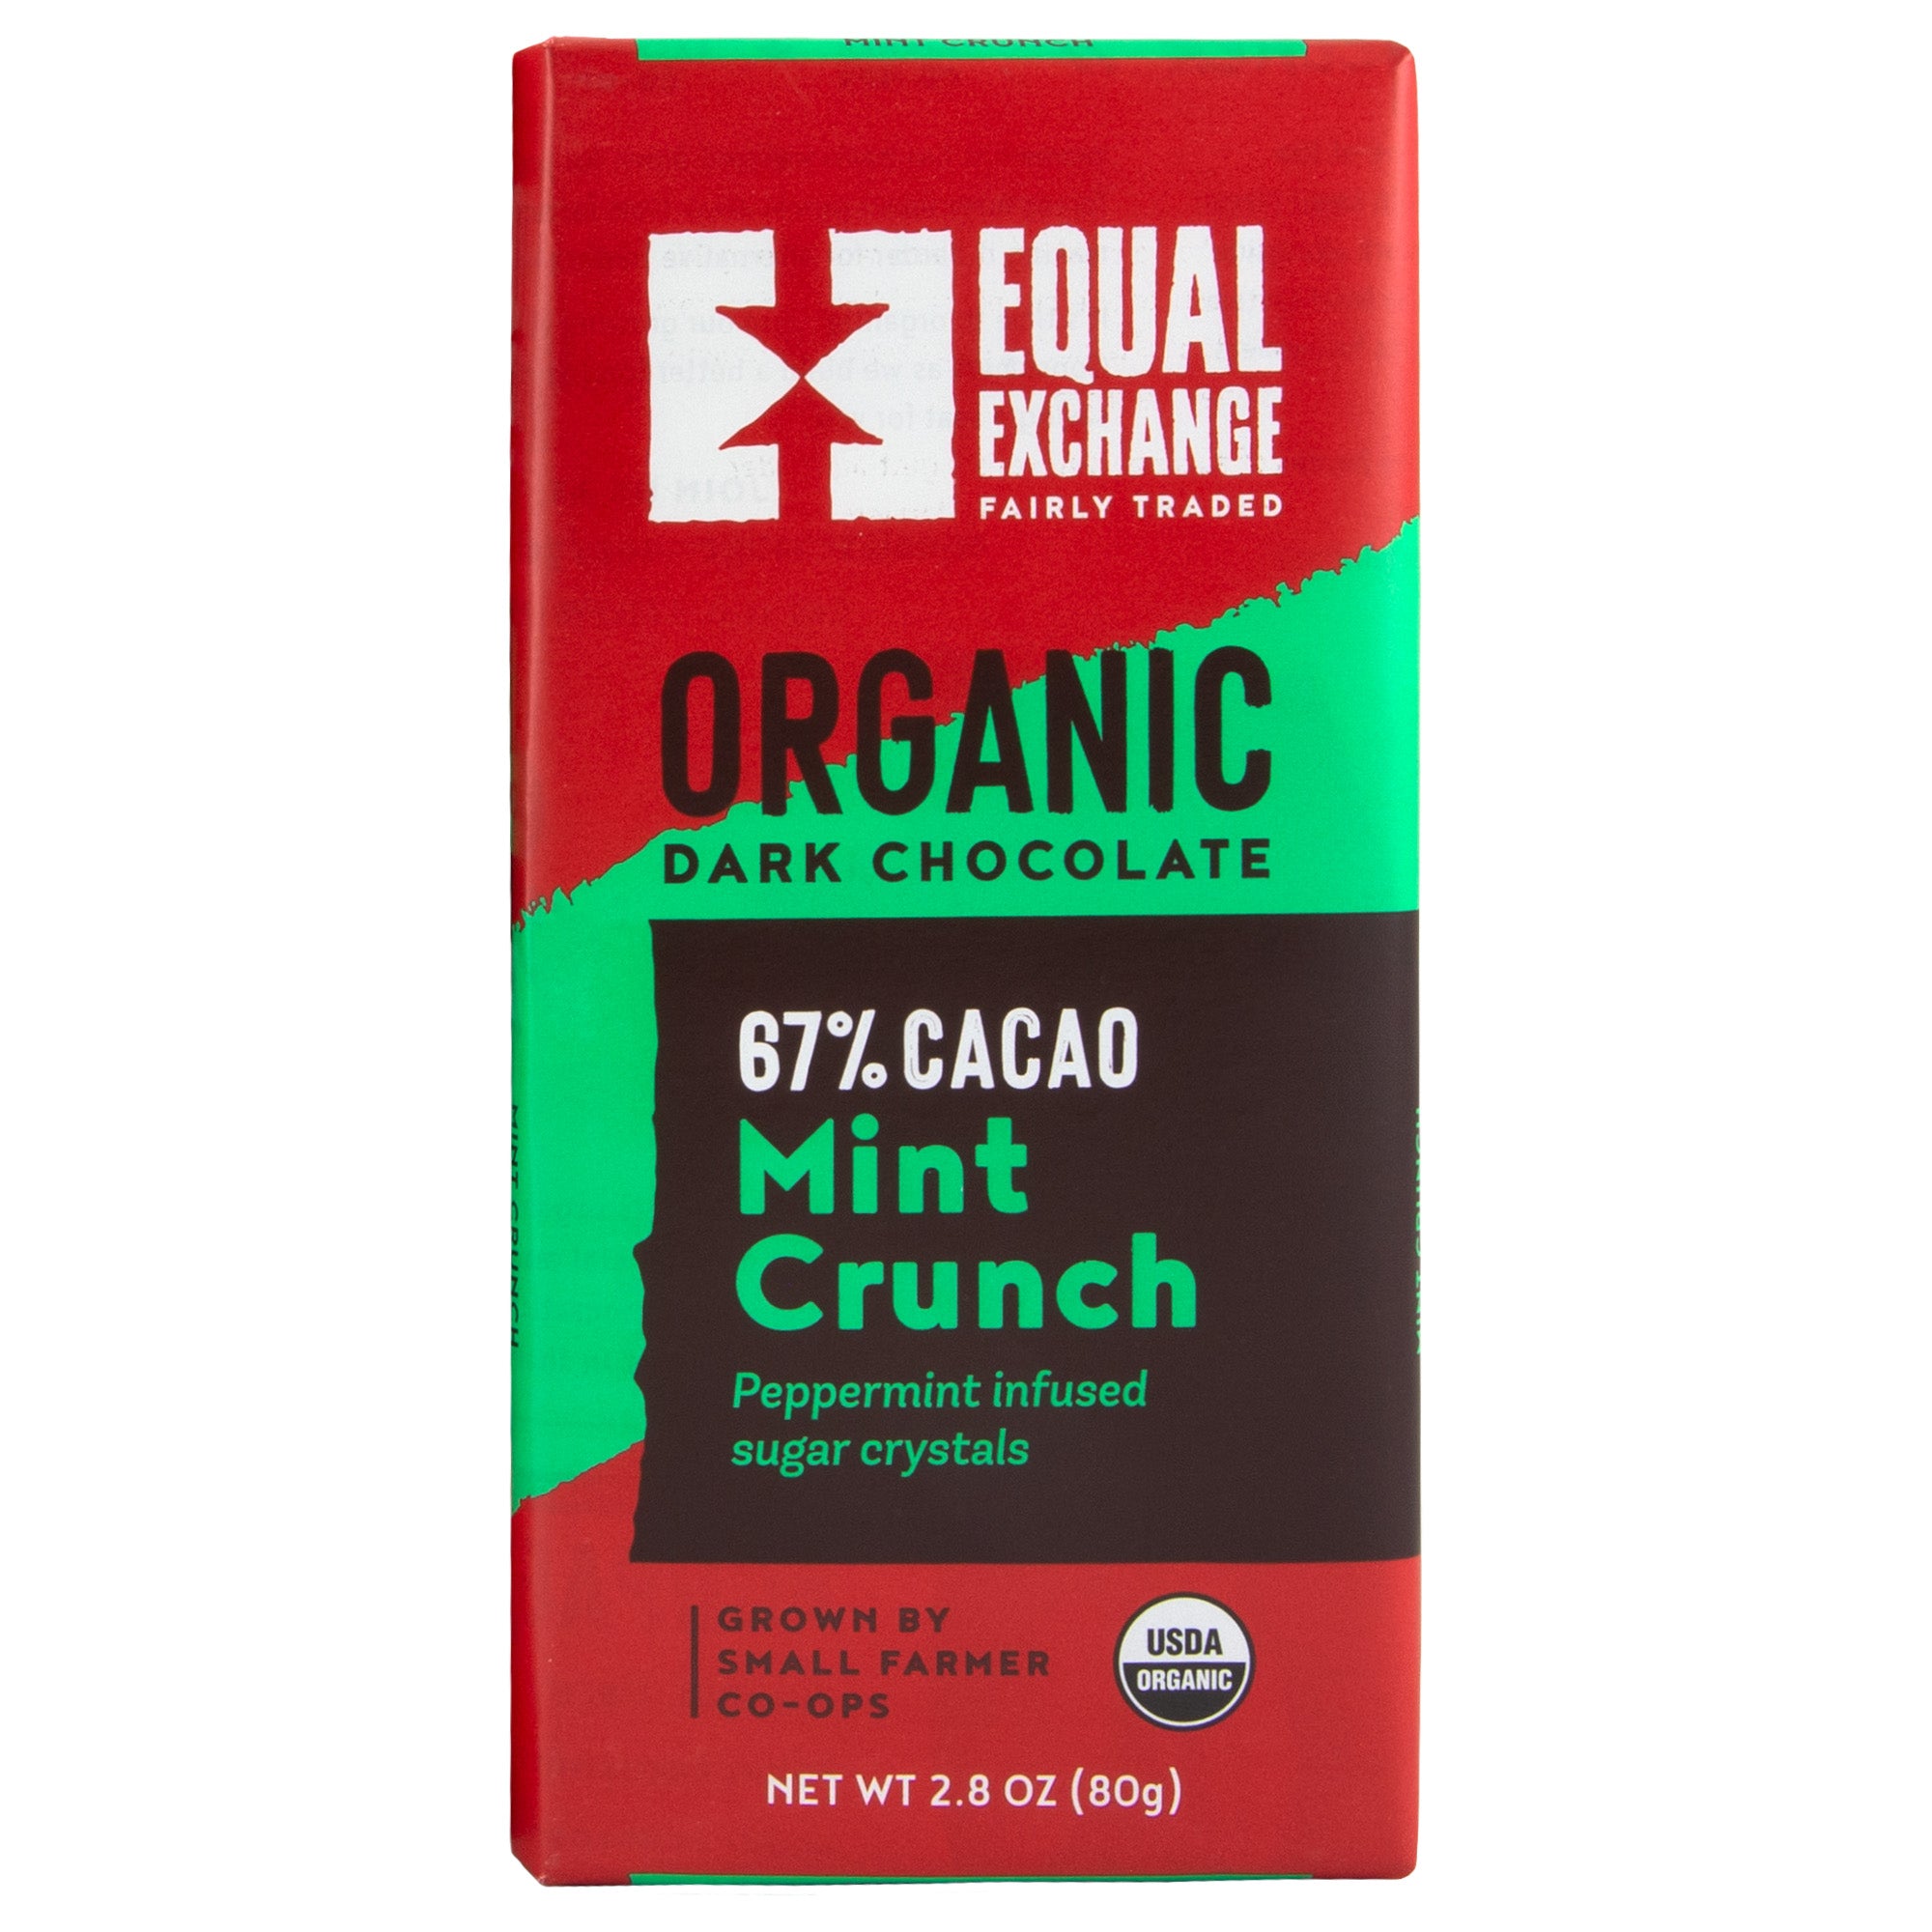 Mint Crunch Organic Dark Chocolate - Equal Exchange - 2.8 oz